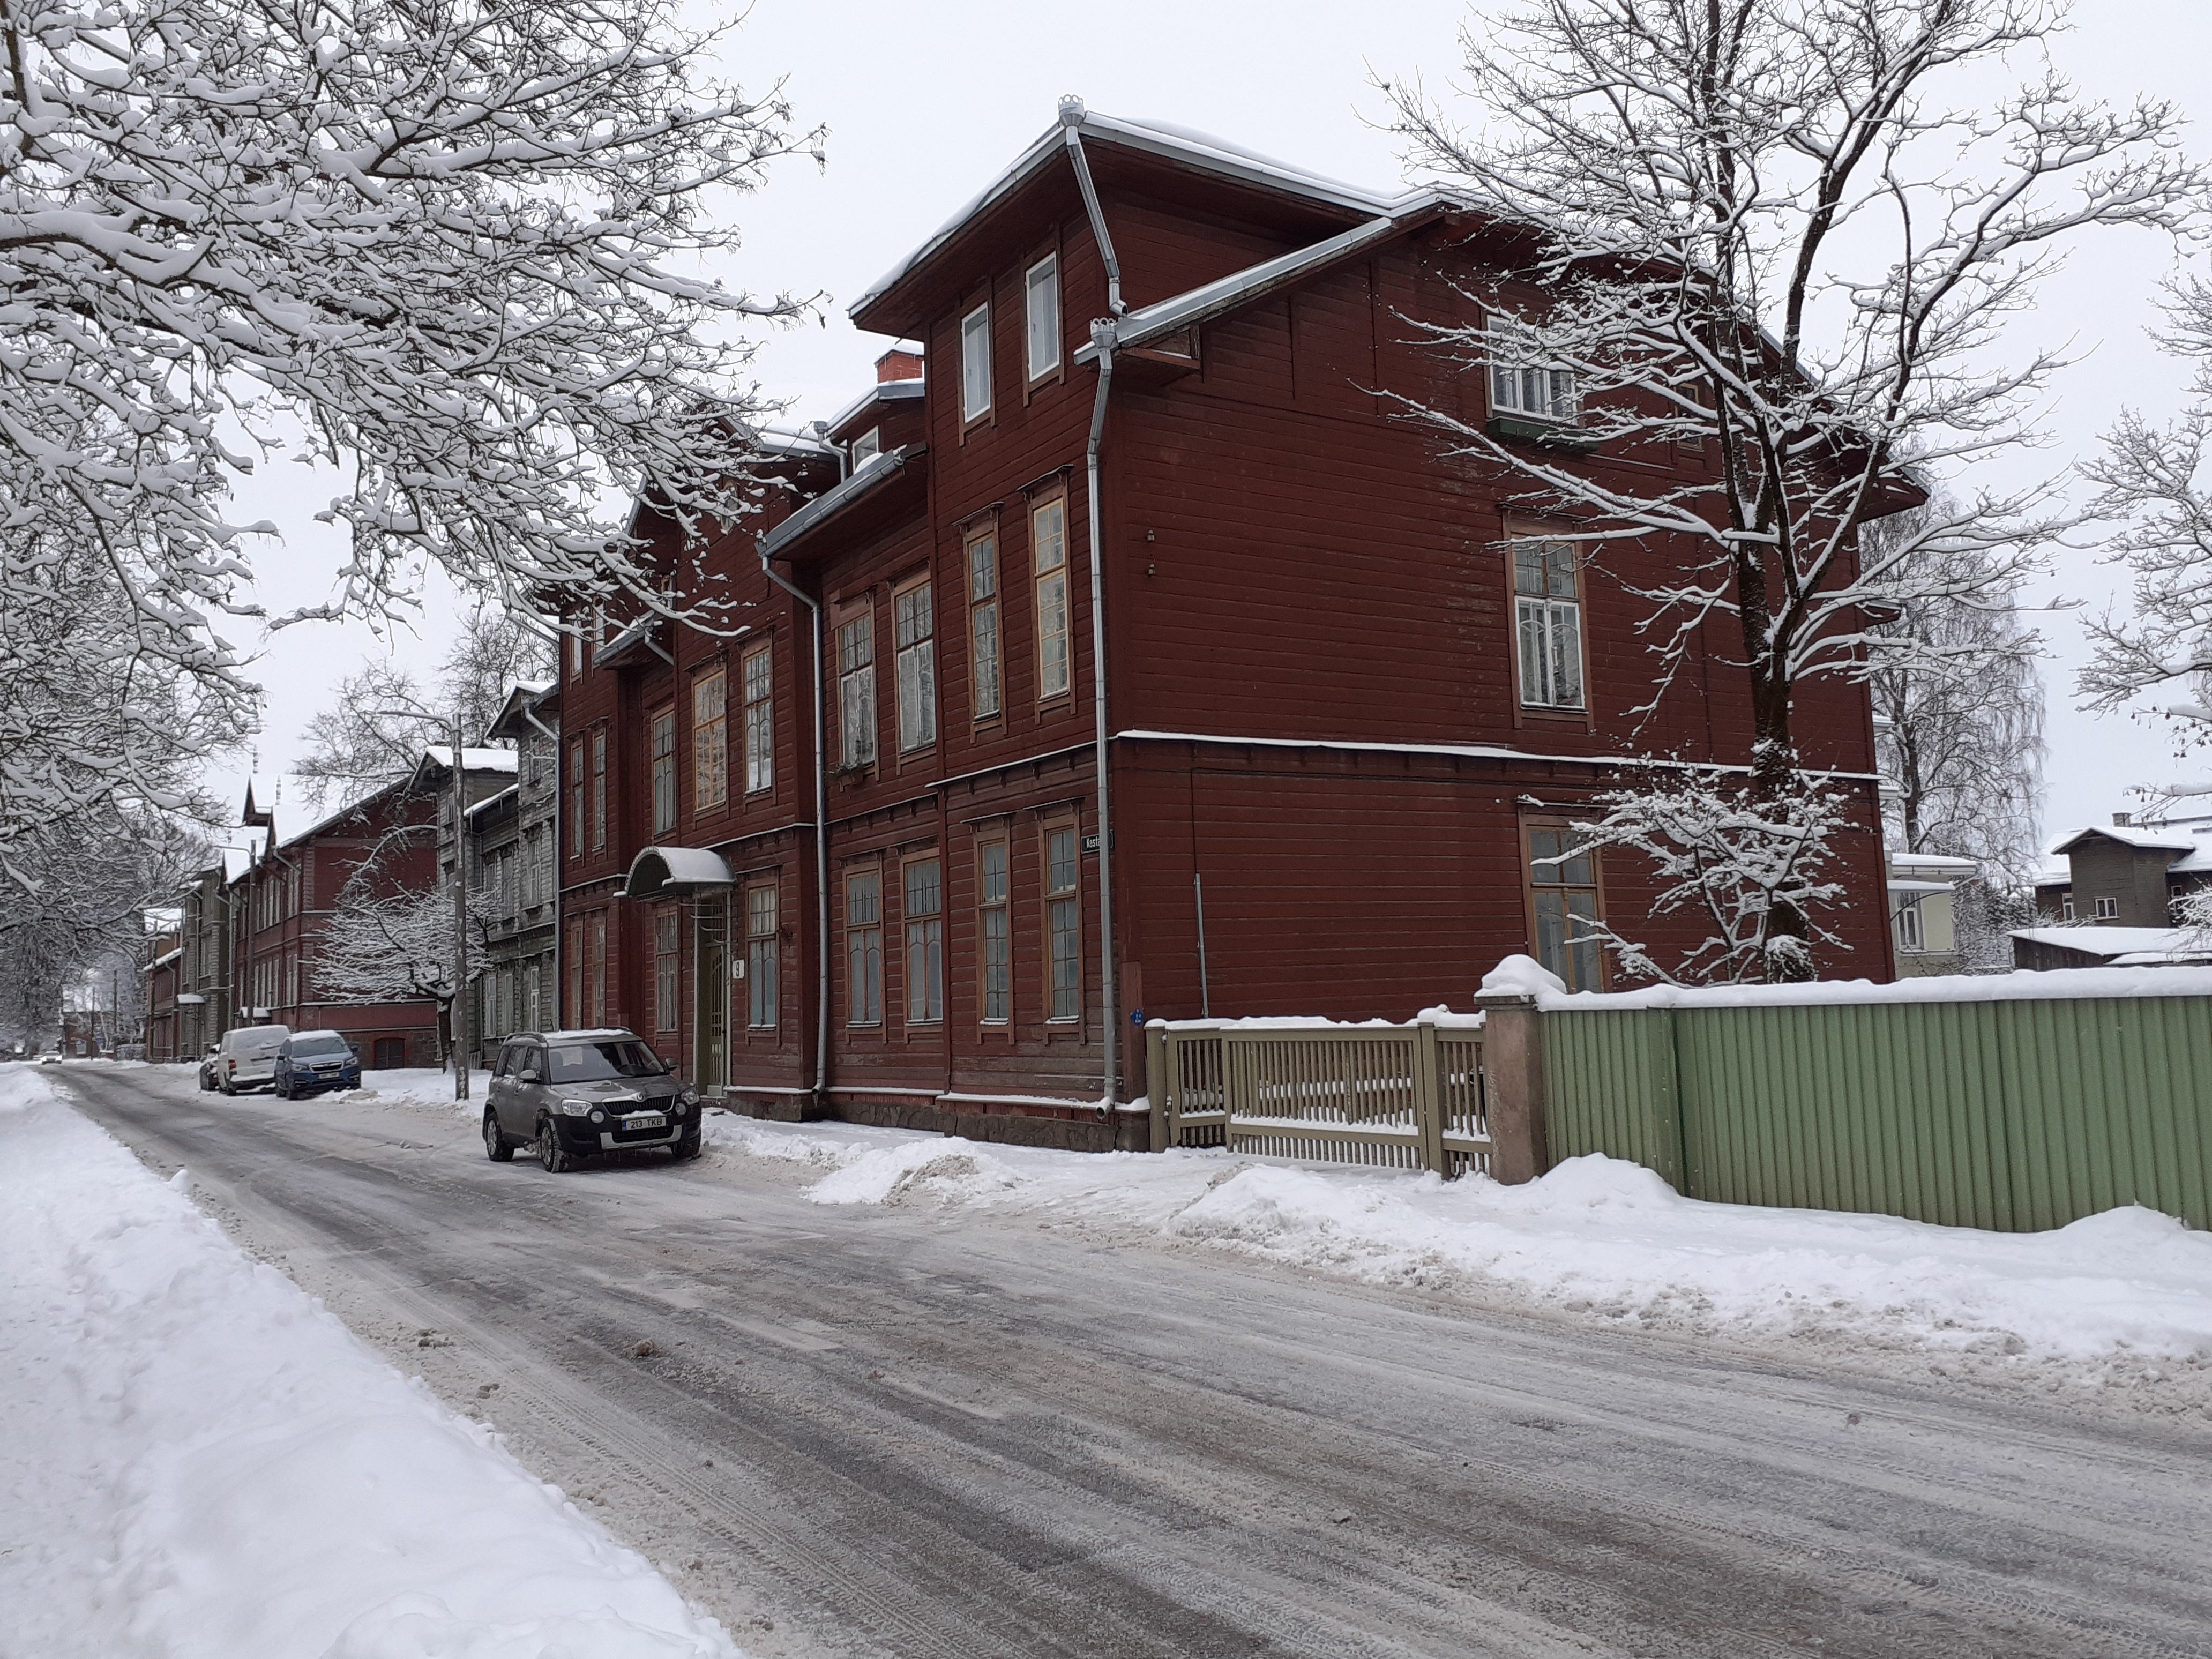 Tartu, Kastani 9, built around 1906. rephoto